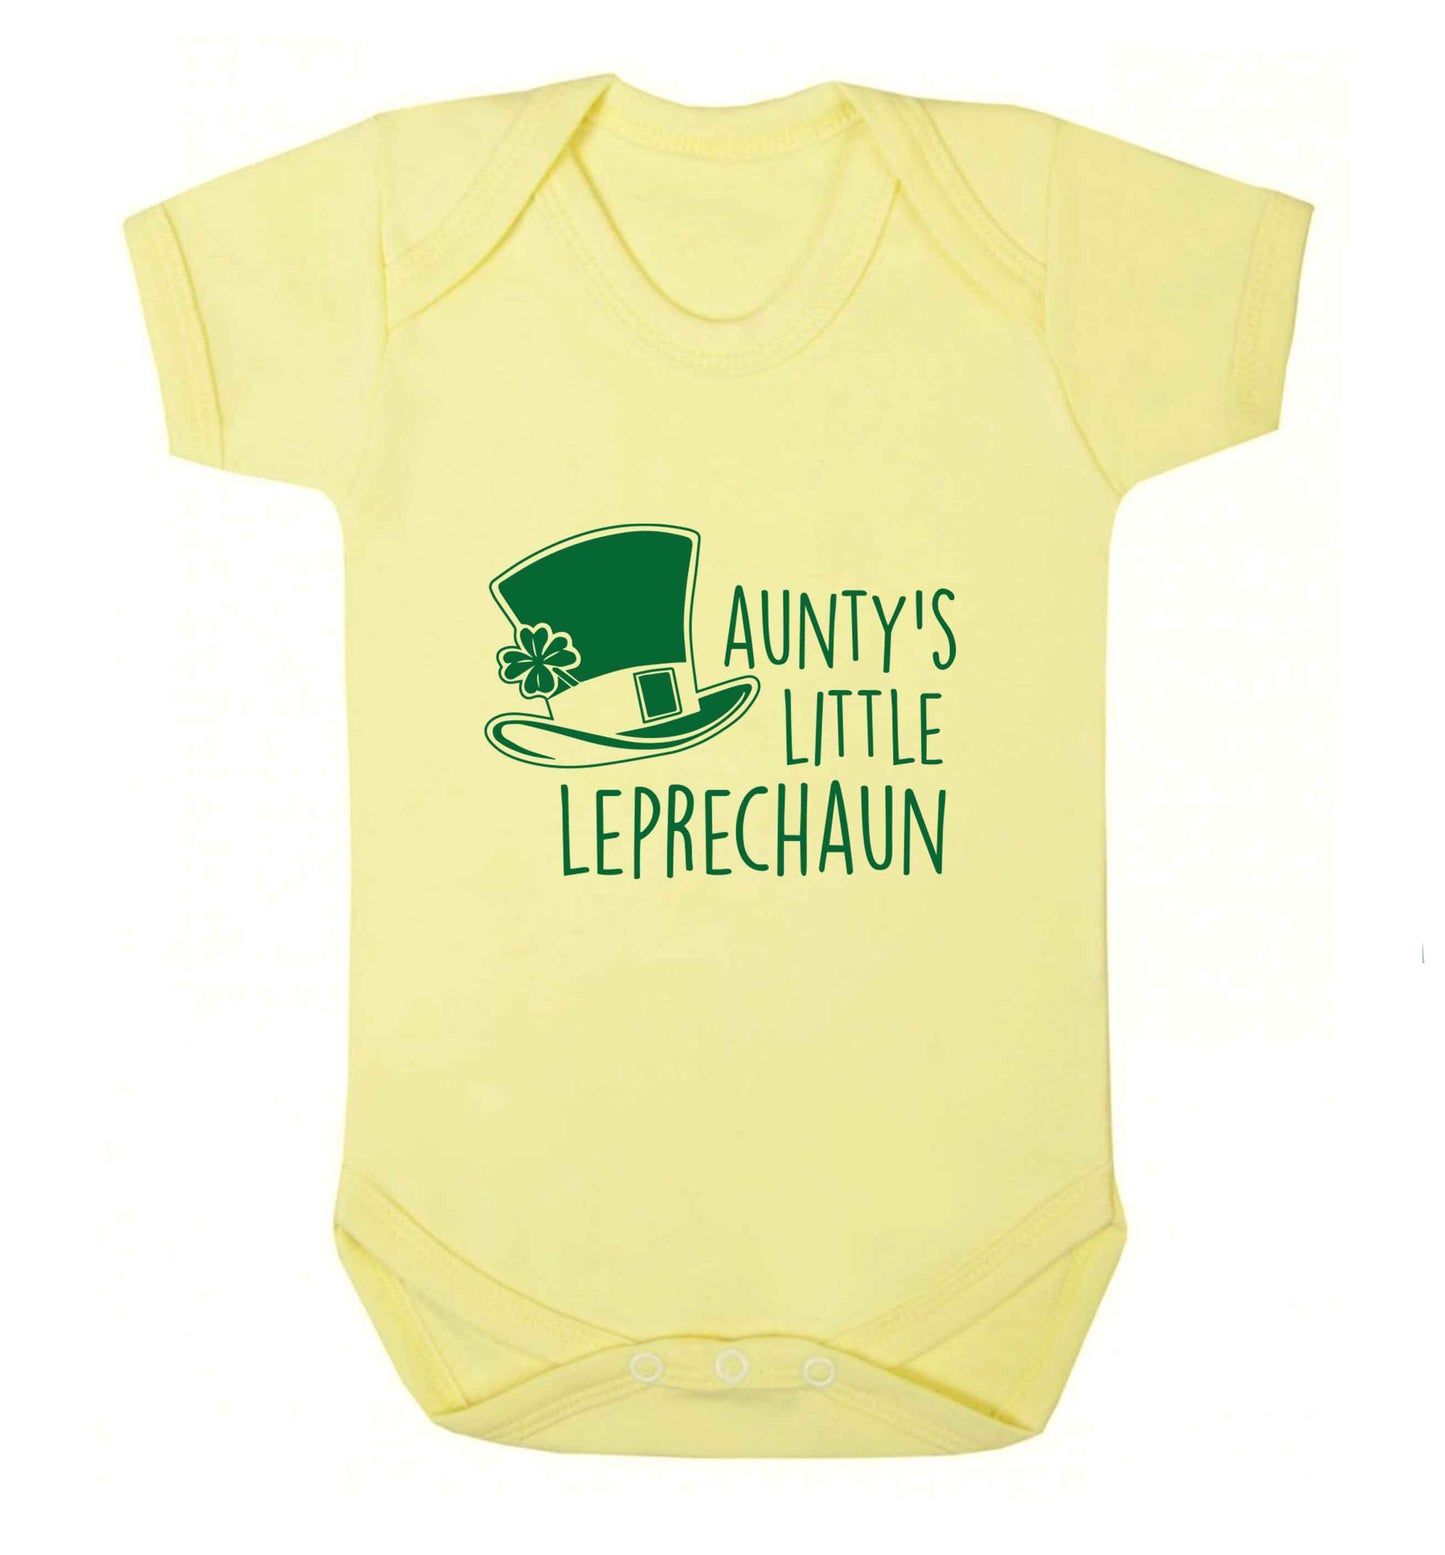 Aunty's little leprechaun baby vest pale yellow 18-24 months